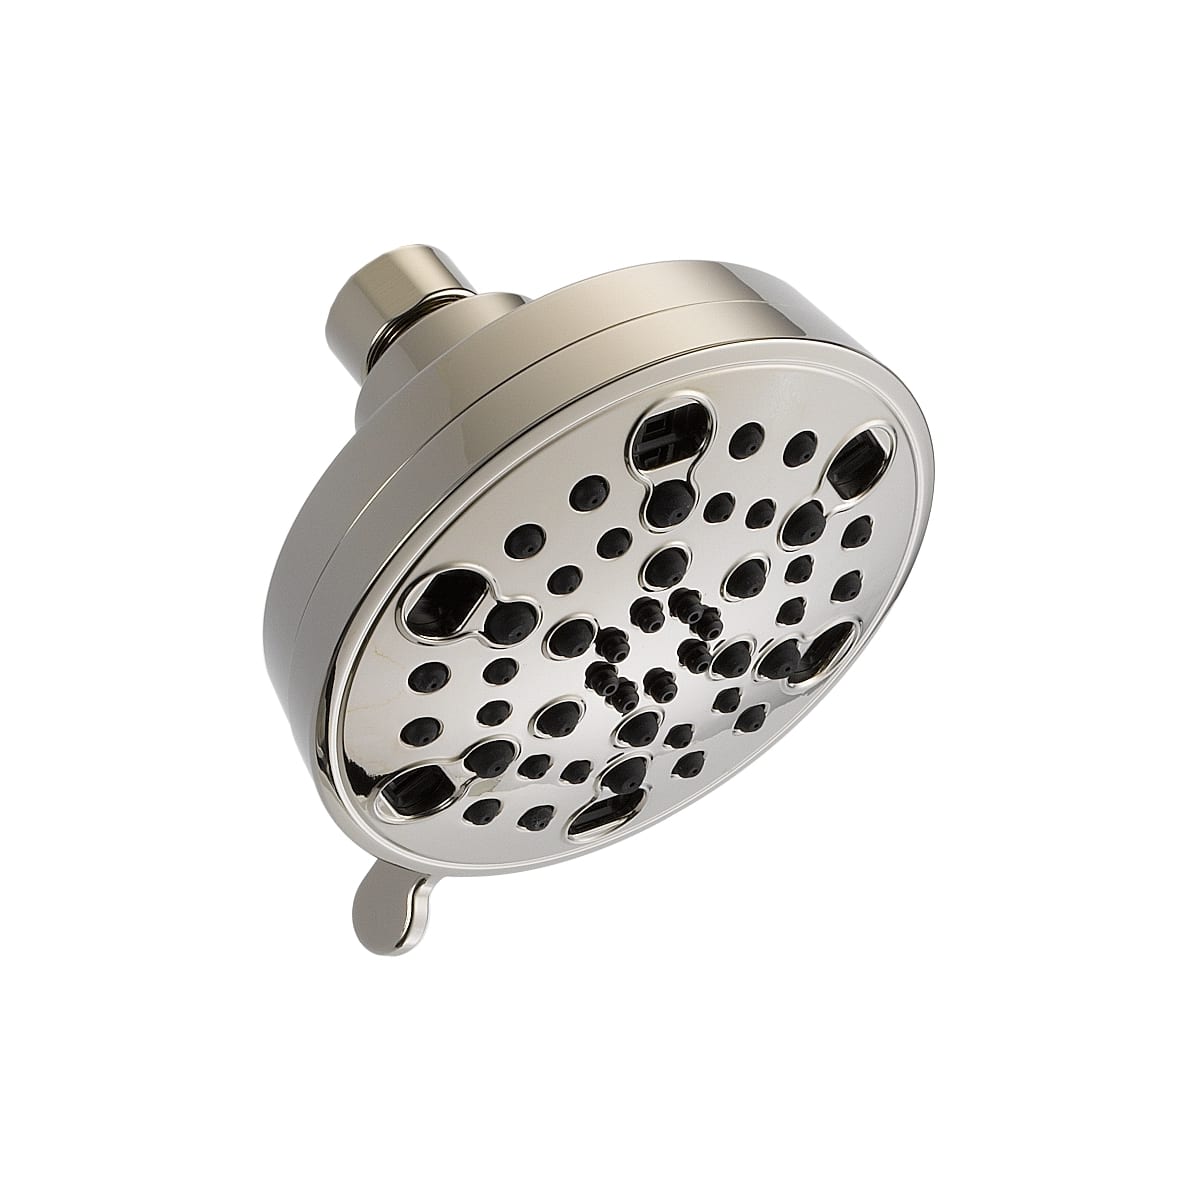 Delta Faucet 5-Spray H2Okinetic Shower Head Matte Black 52638-BL15-PK